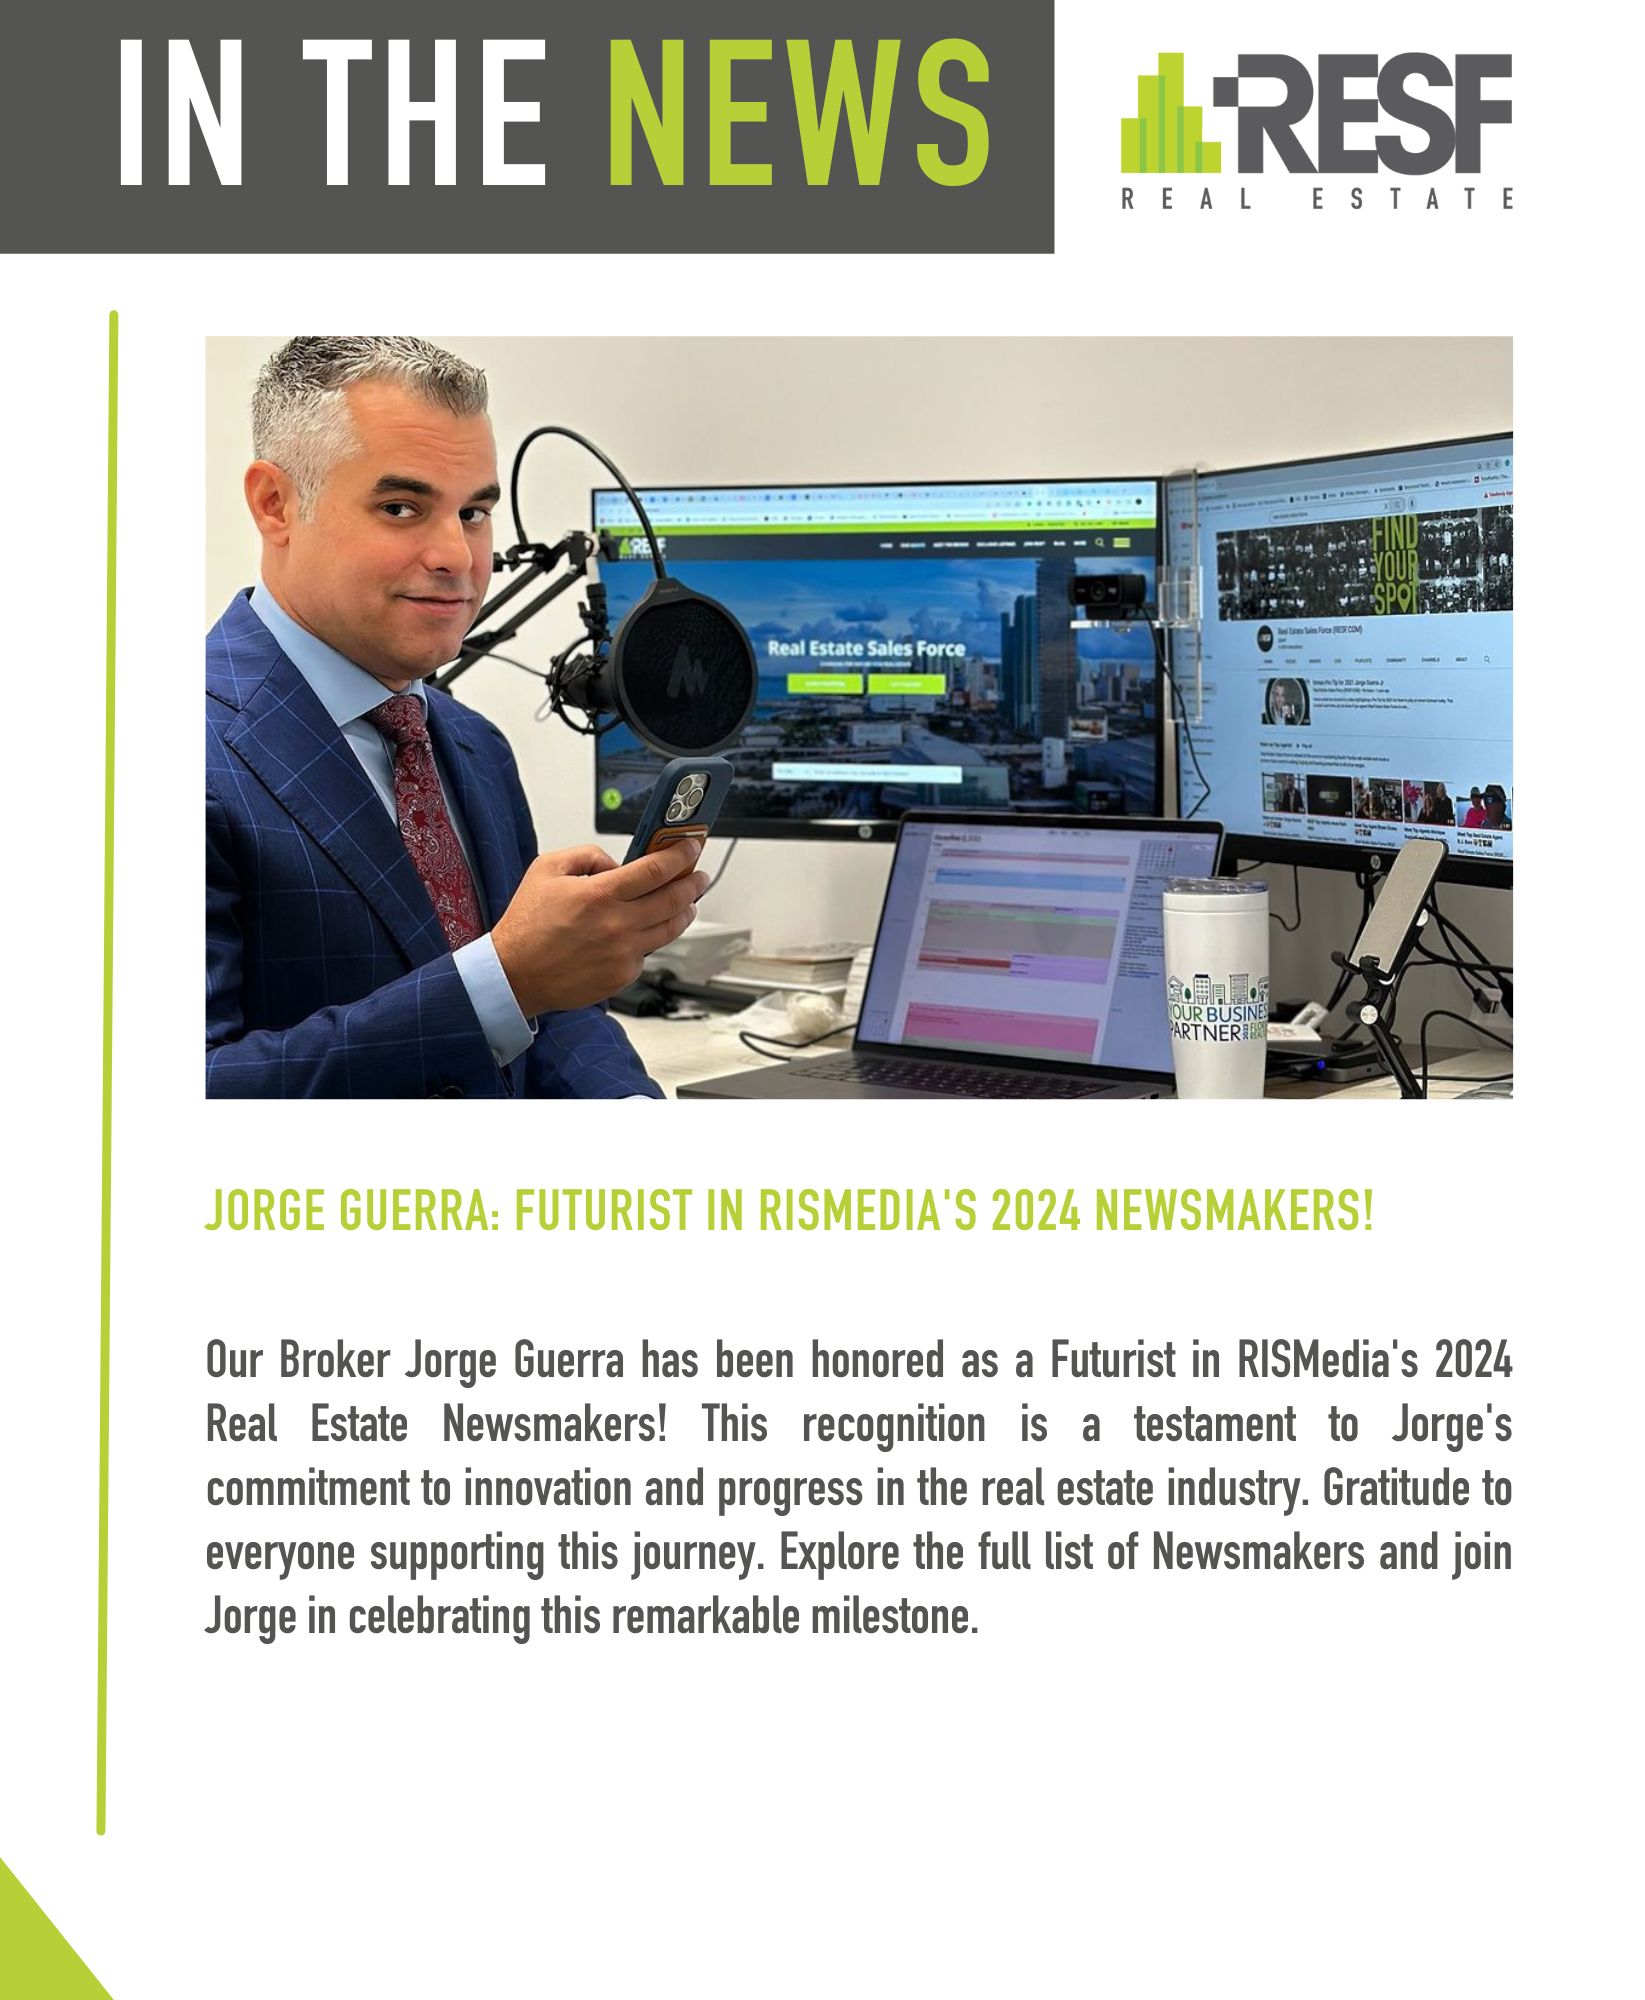 Jorge Guerra: Futurist in RISMedia’s 2024 Newsmakers!